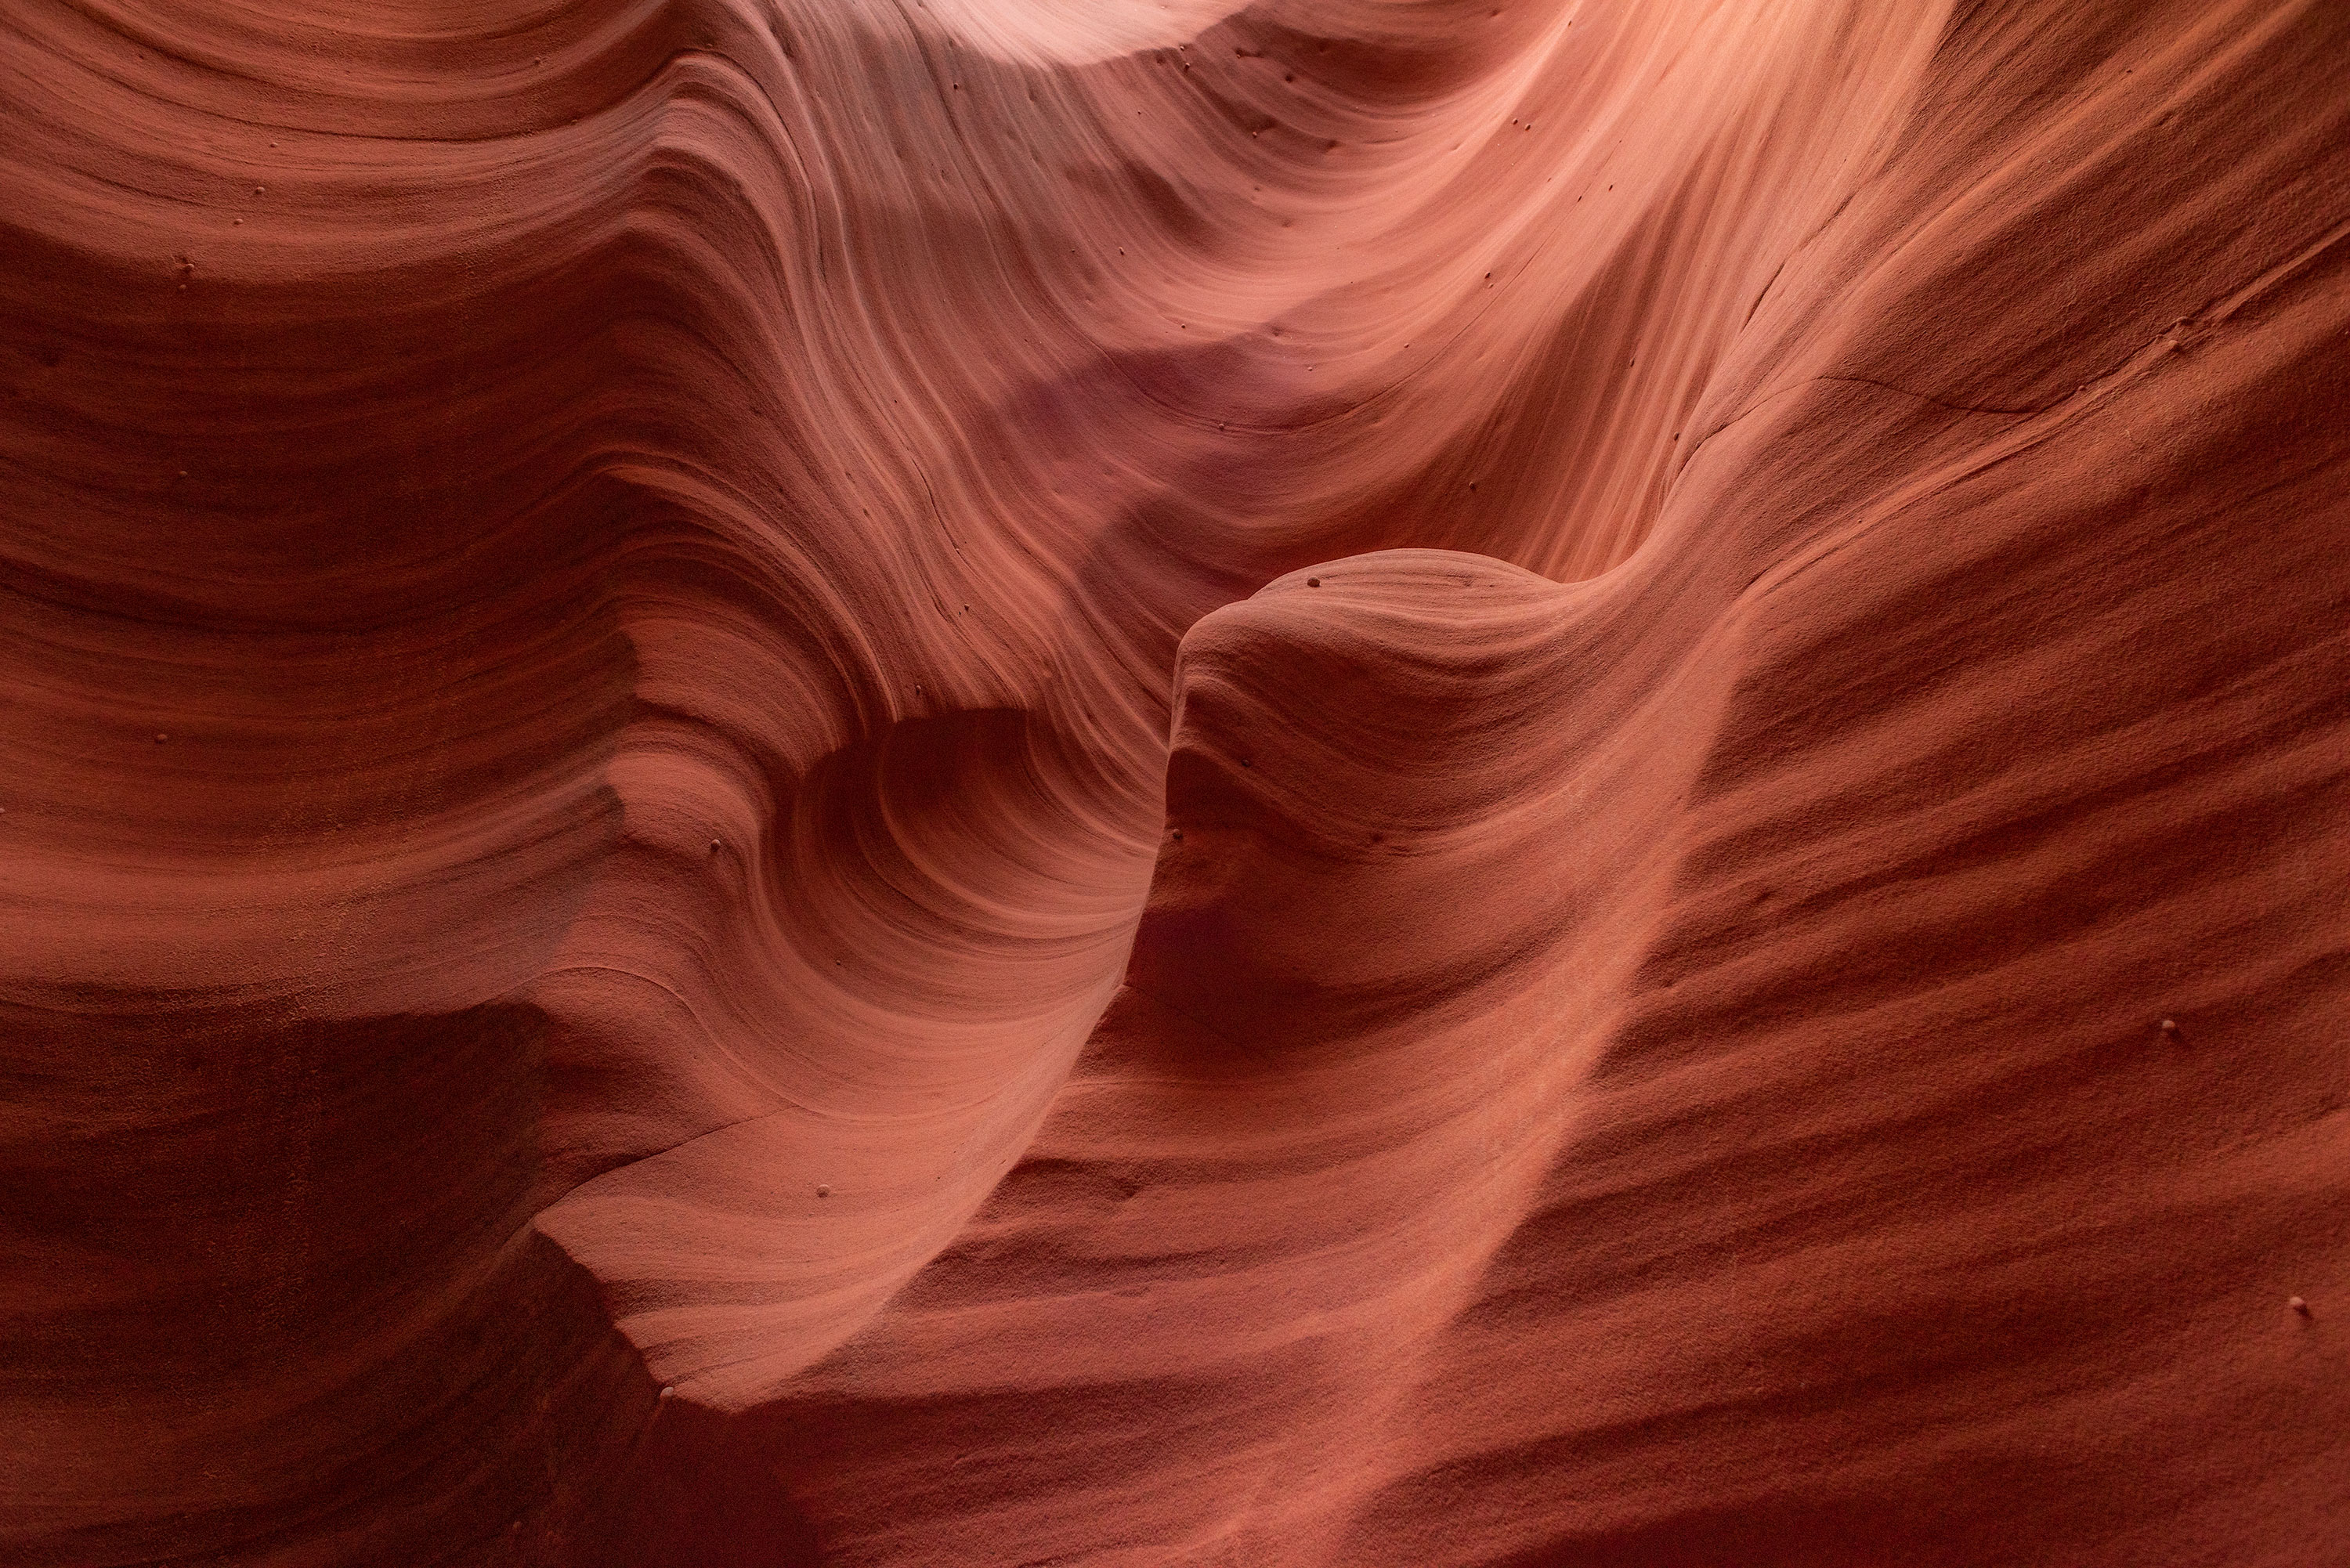 Landscape photography of Antelope Canyon in Arizona taken by photographer Jennifer Esseiva.